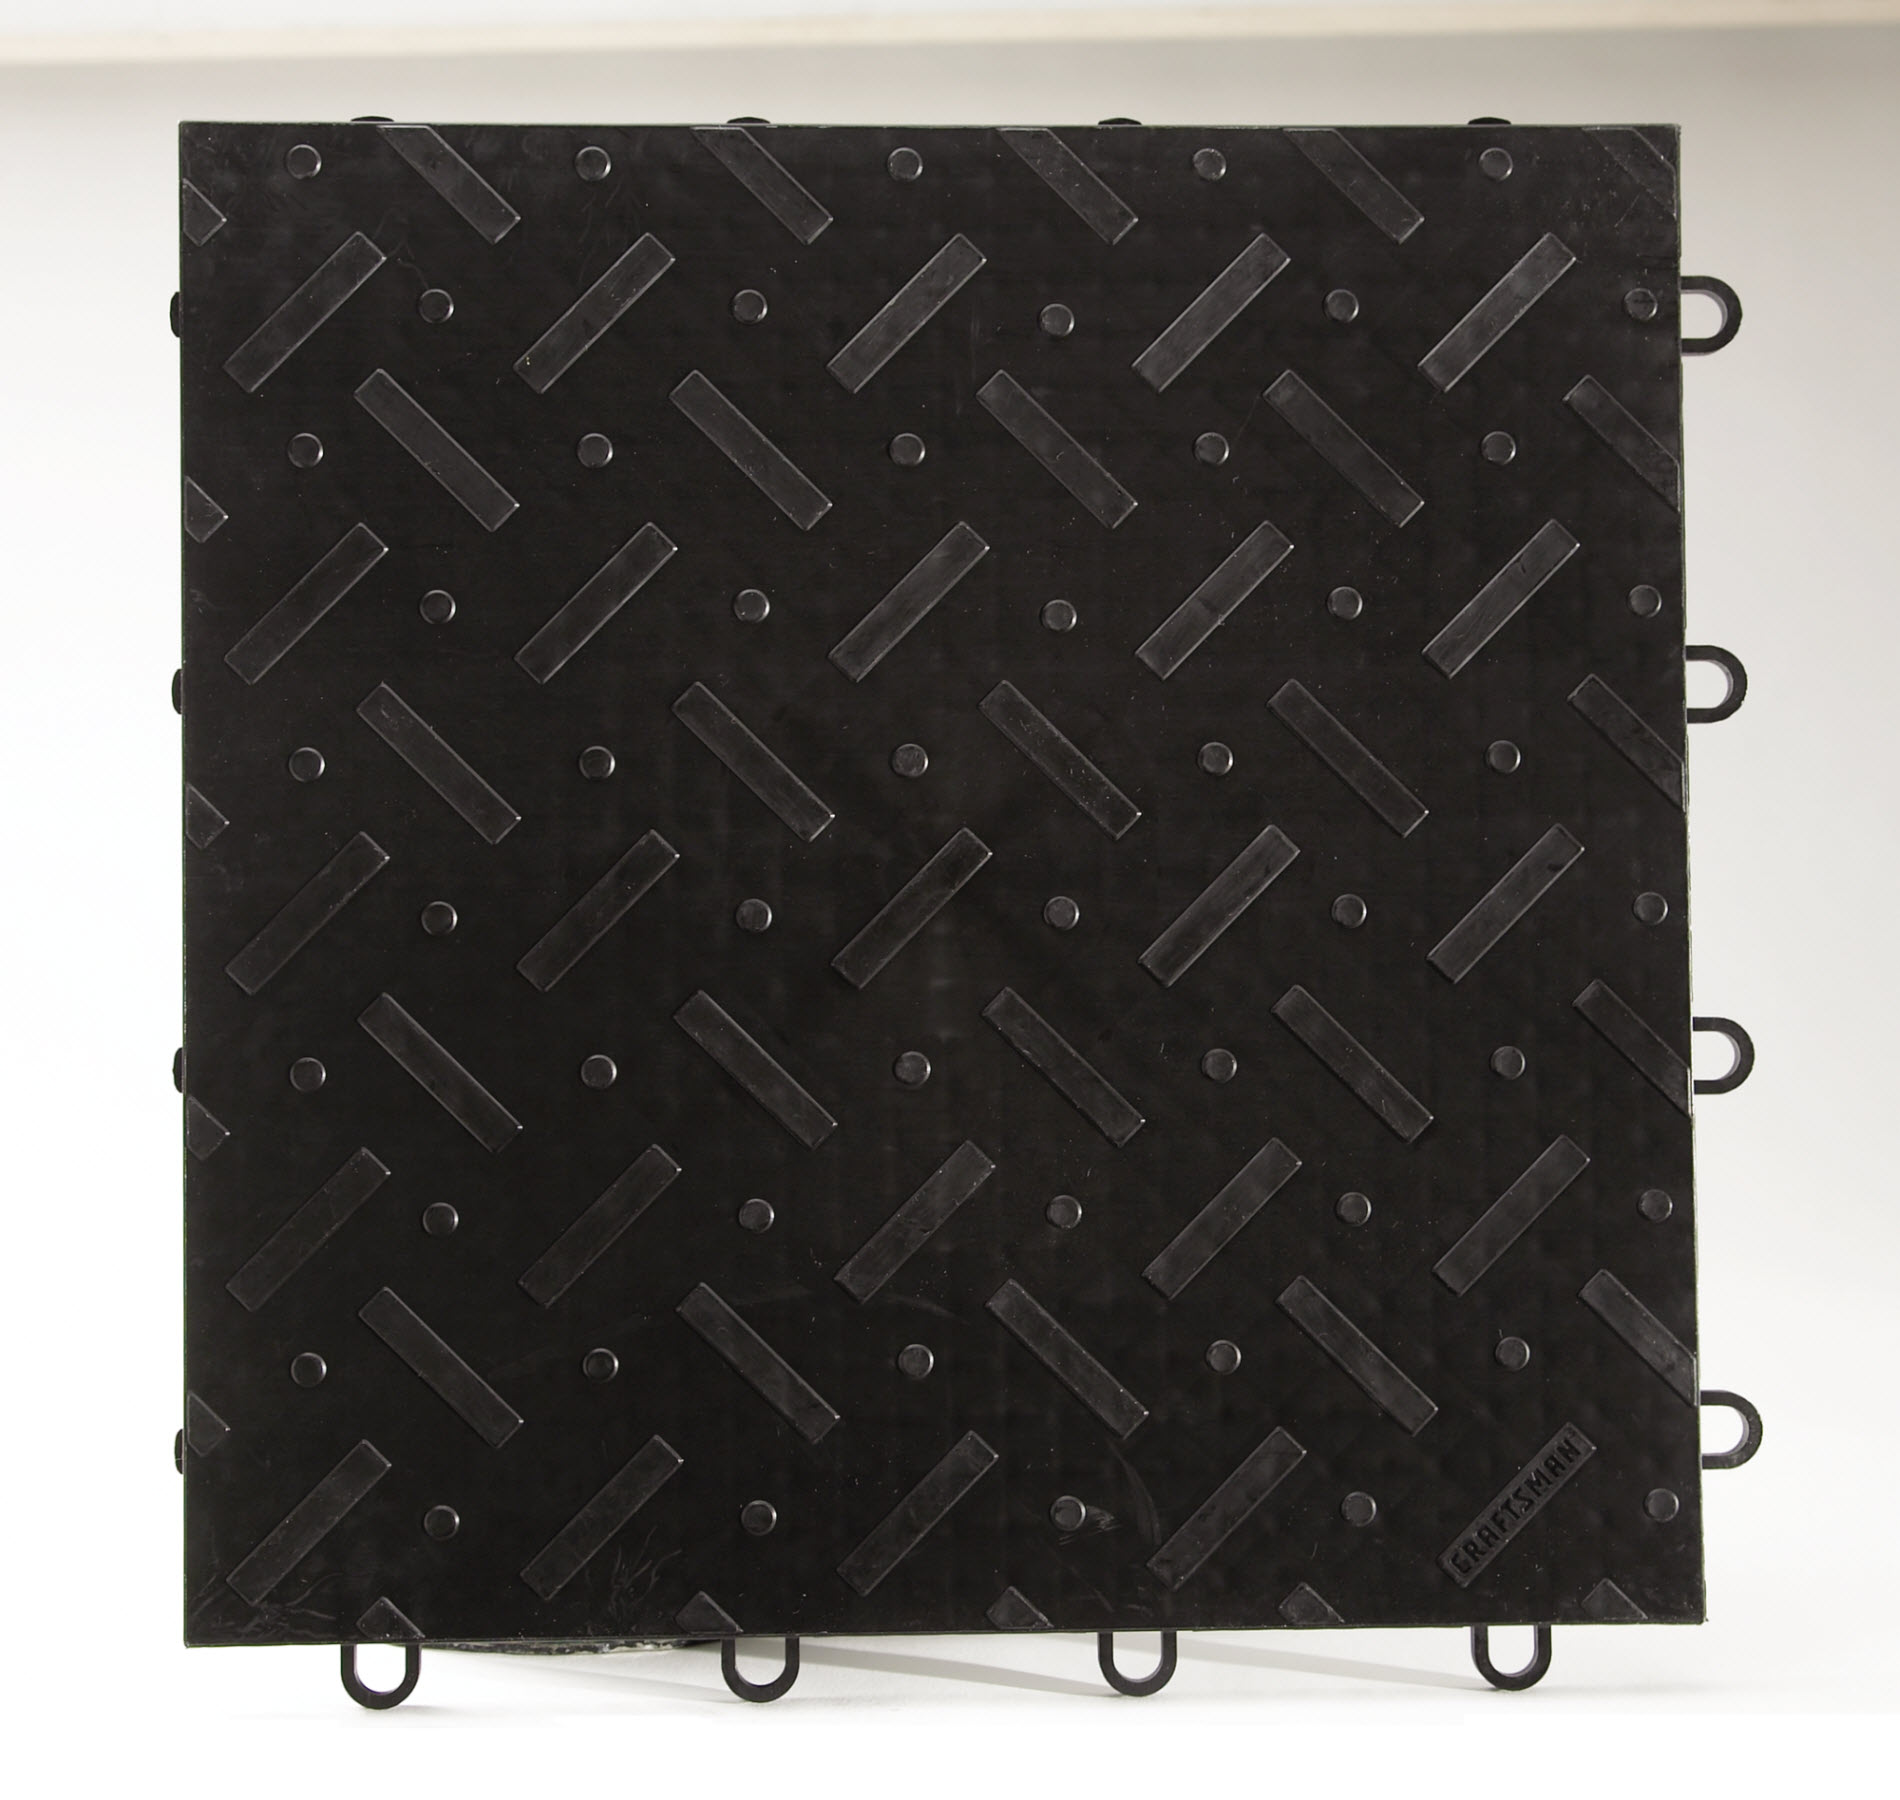 Craftsman Garage Tiles - Black, 40 count Box